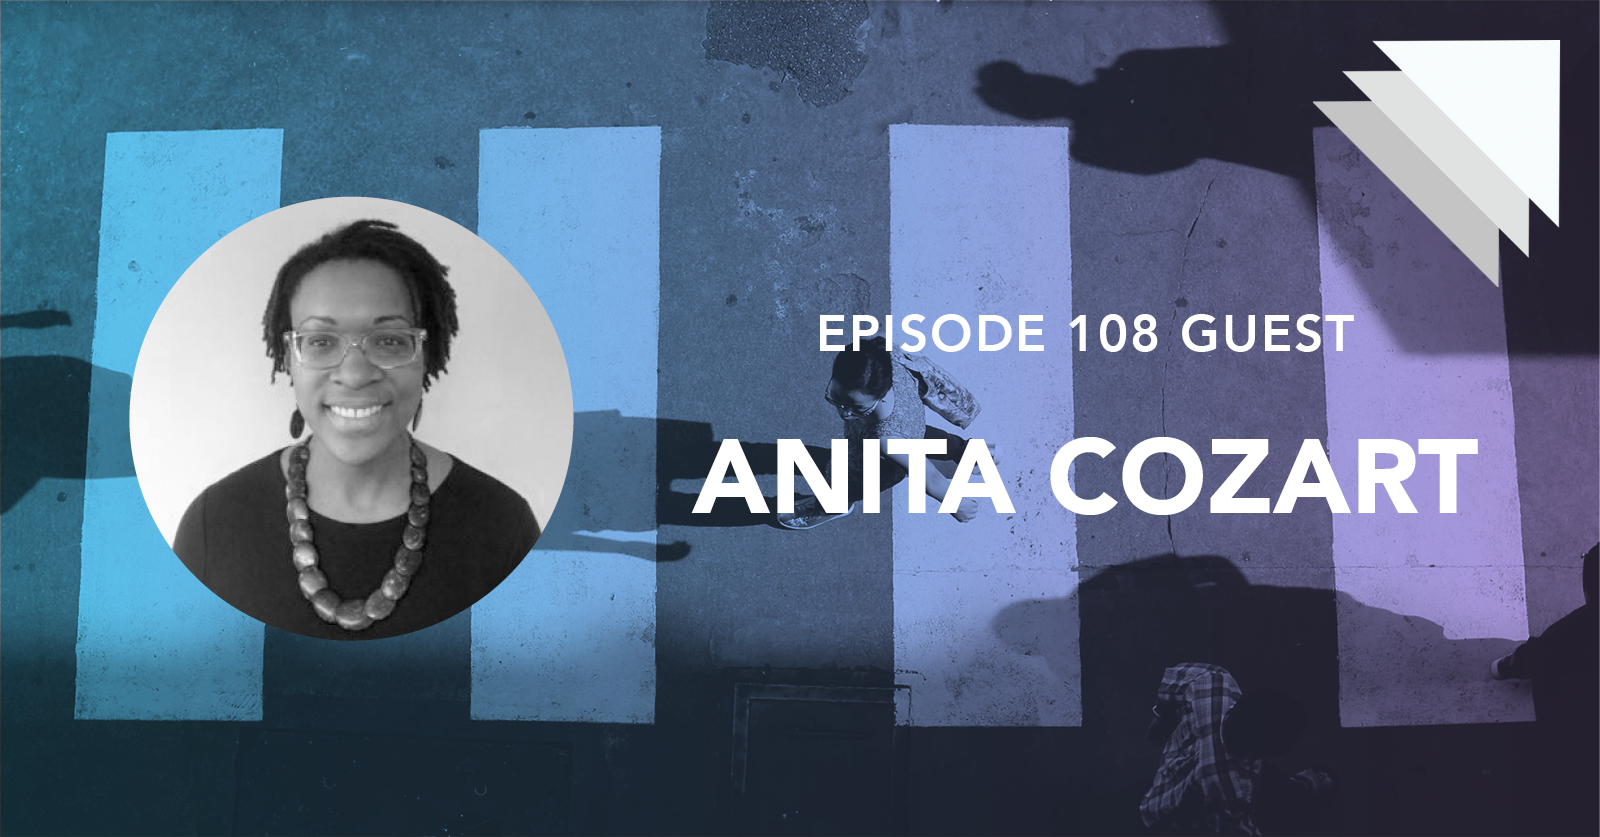 Episode 108 guest Anita Cozart